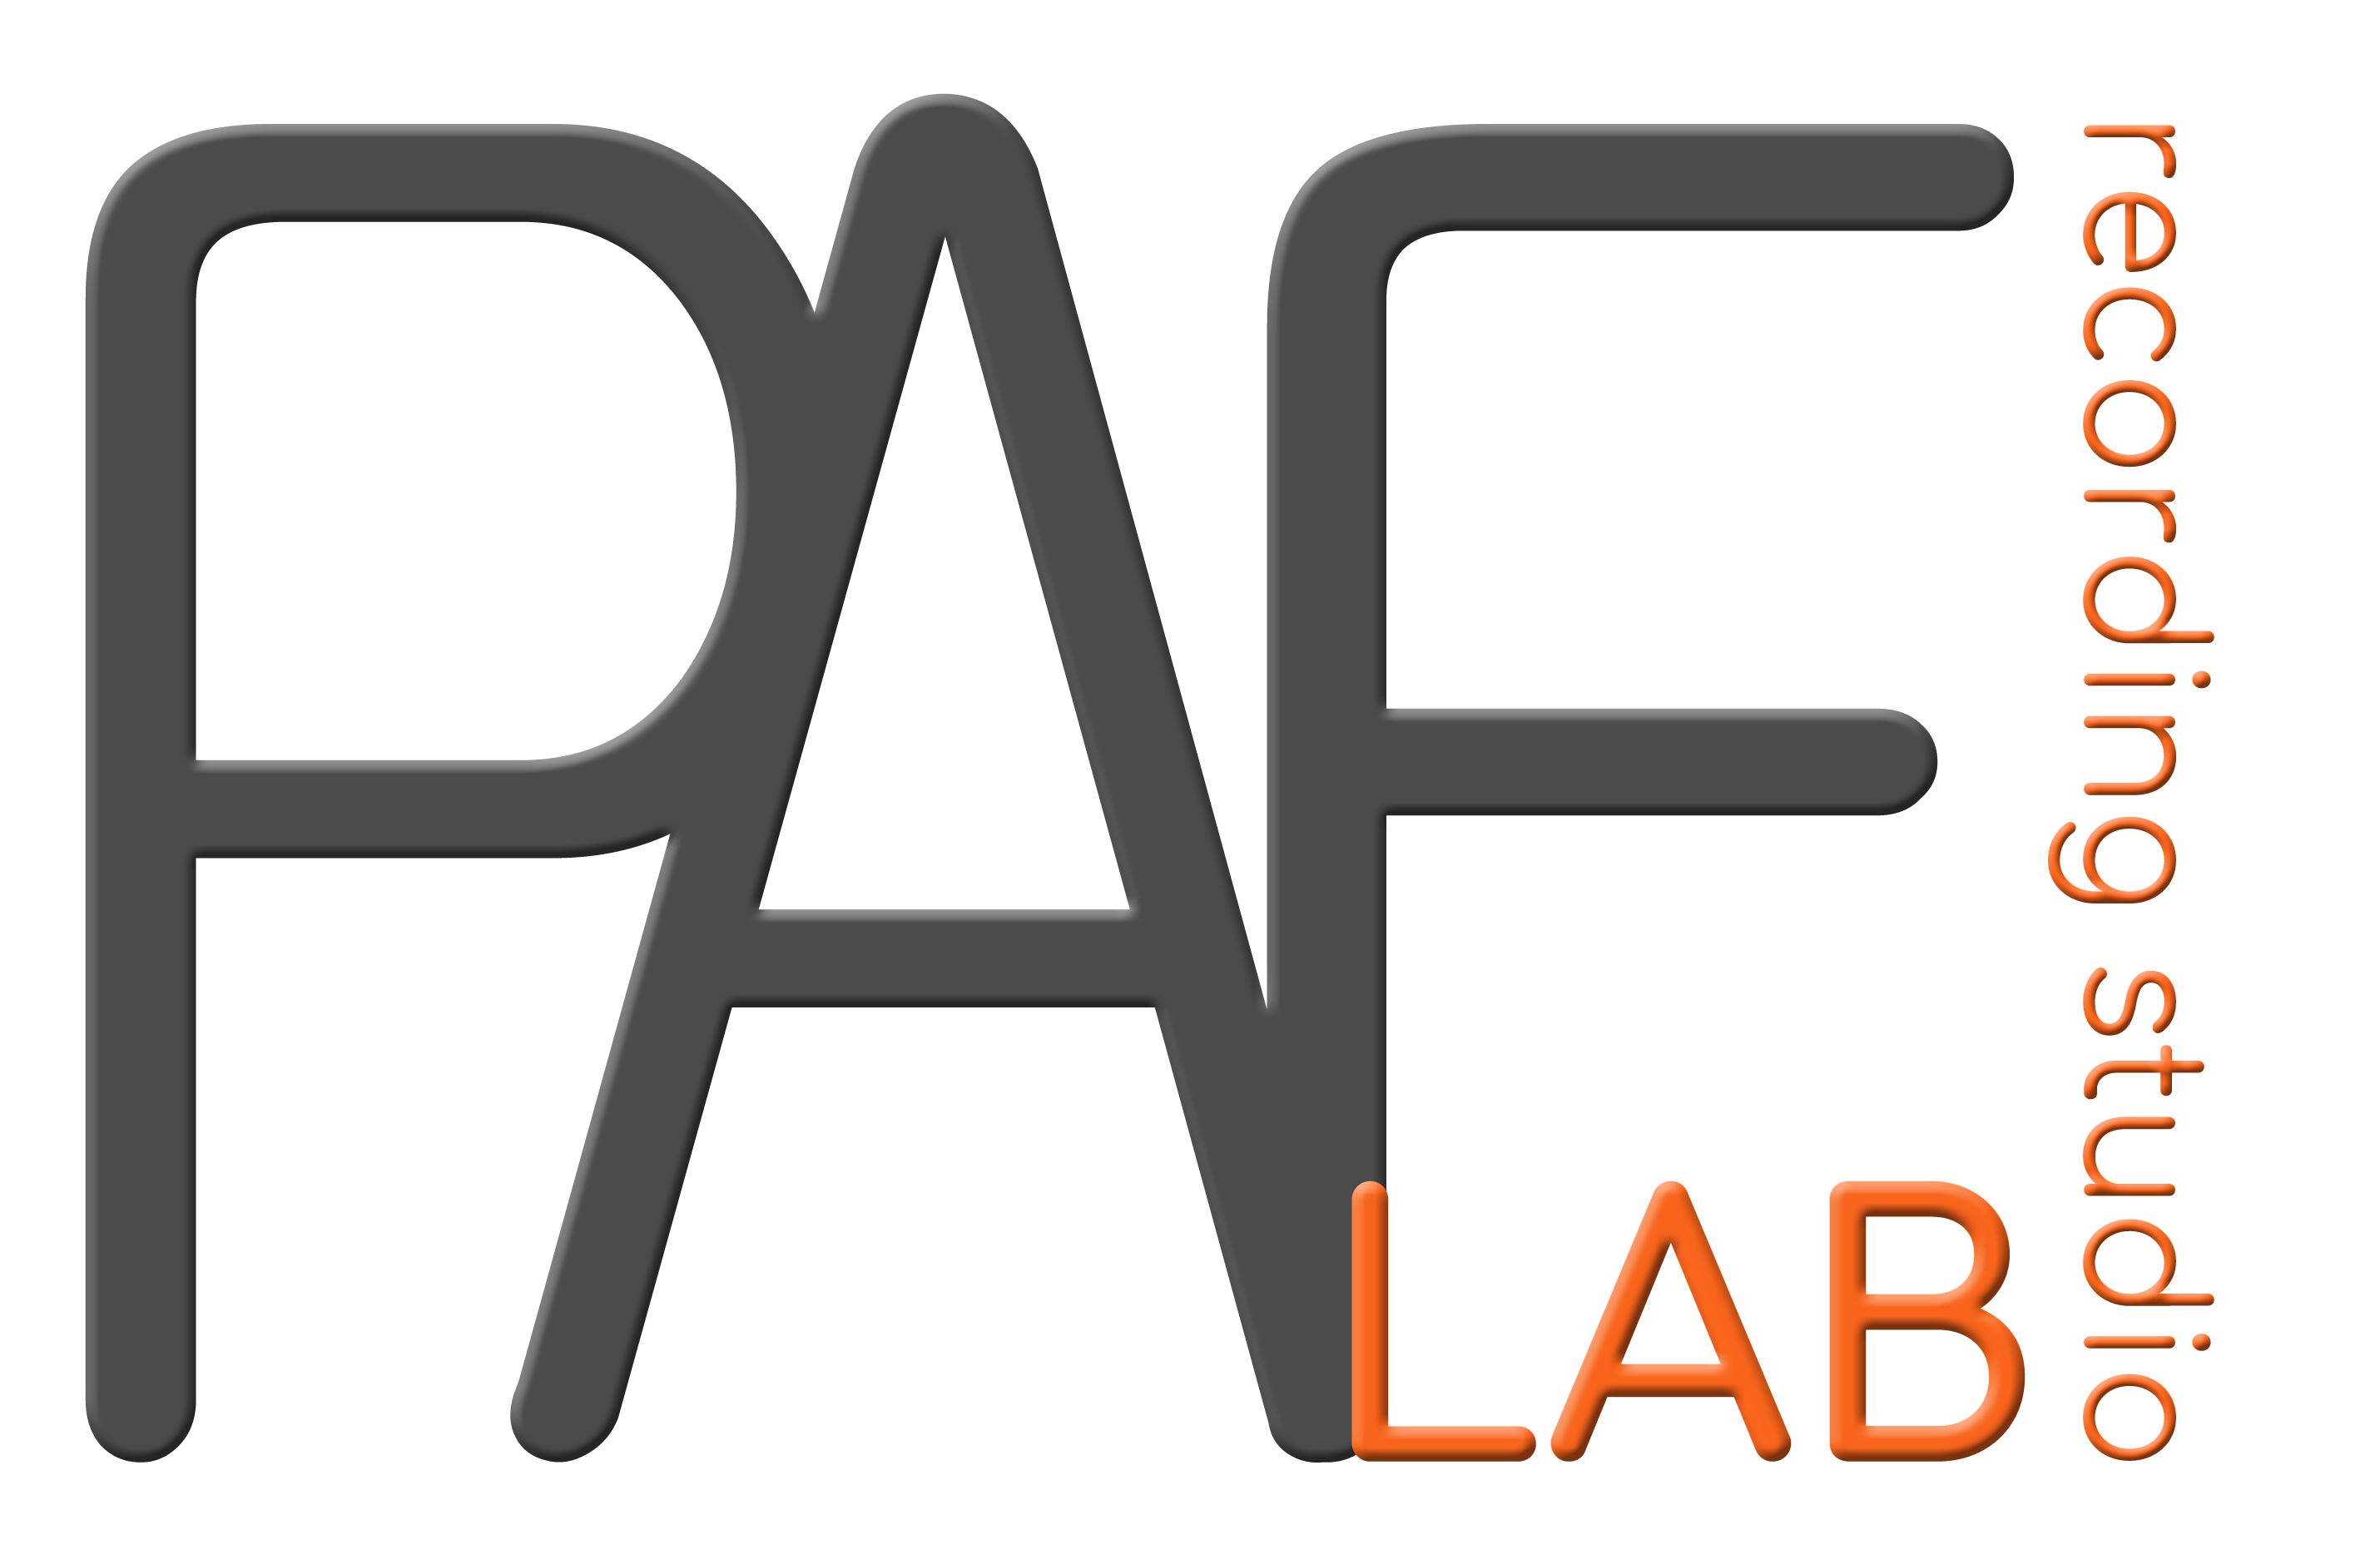 Paf Lab Recording Studio